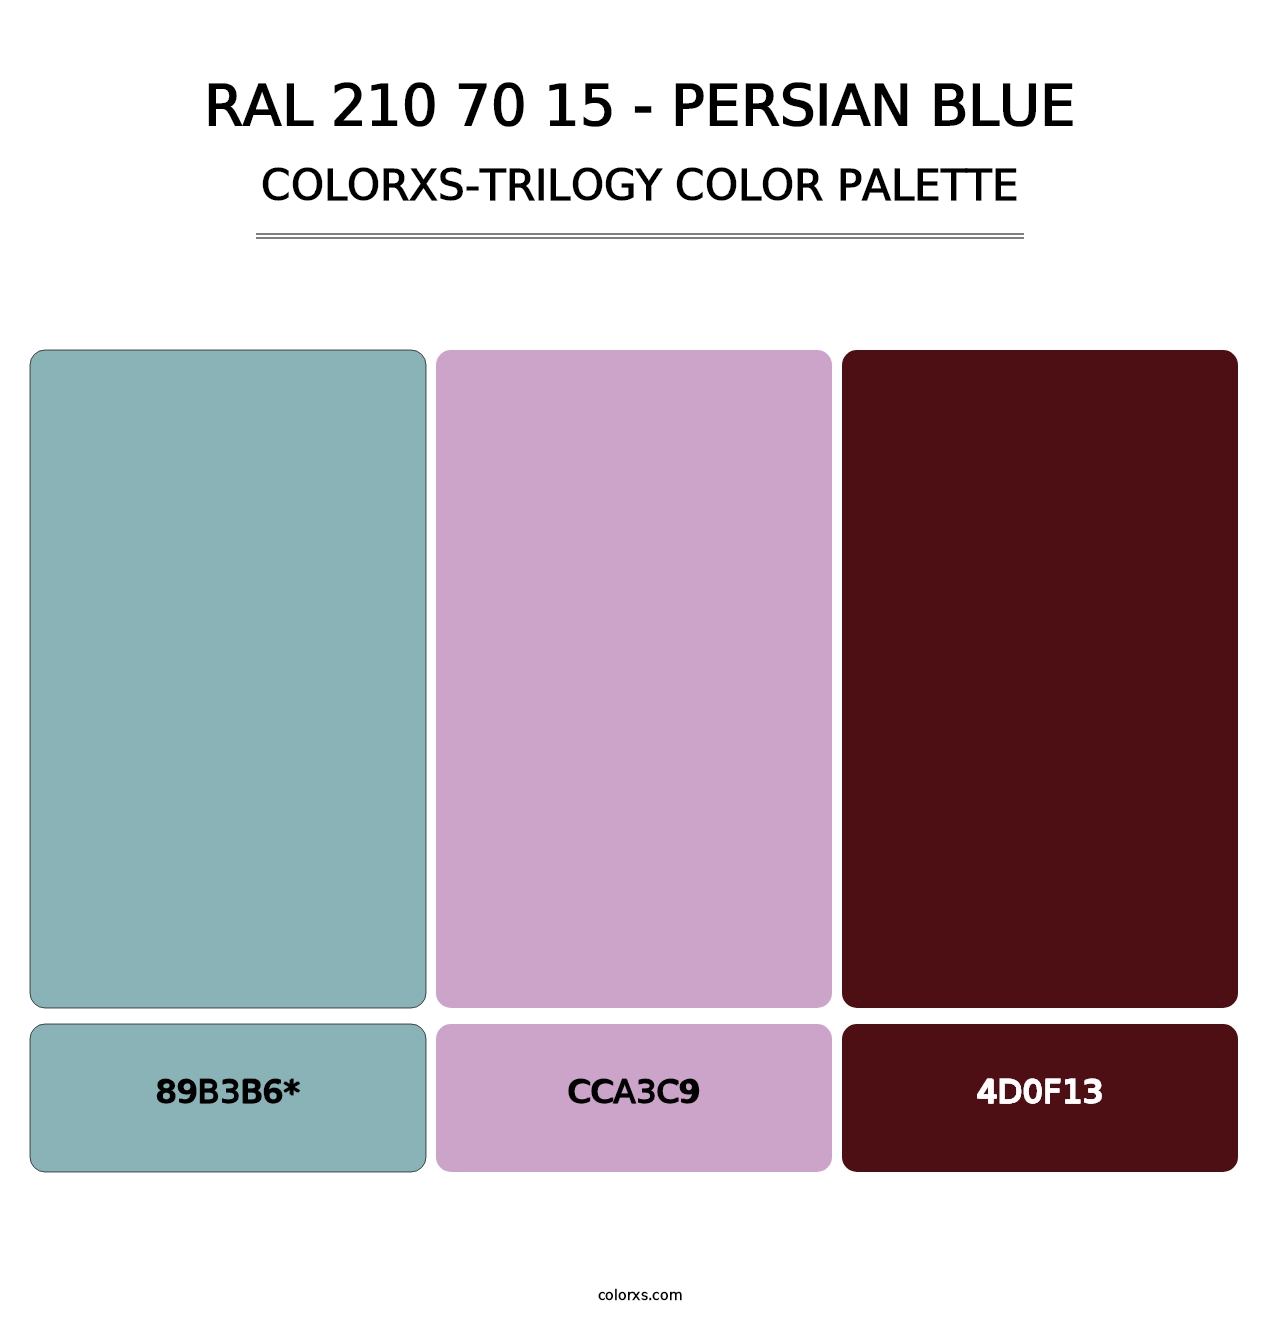 RAL 210 70 15 - Persian Blue - Colorxs Trilogy Palette